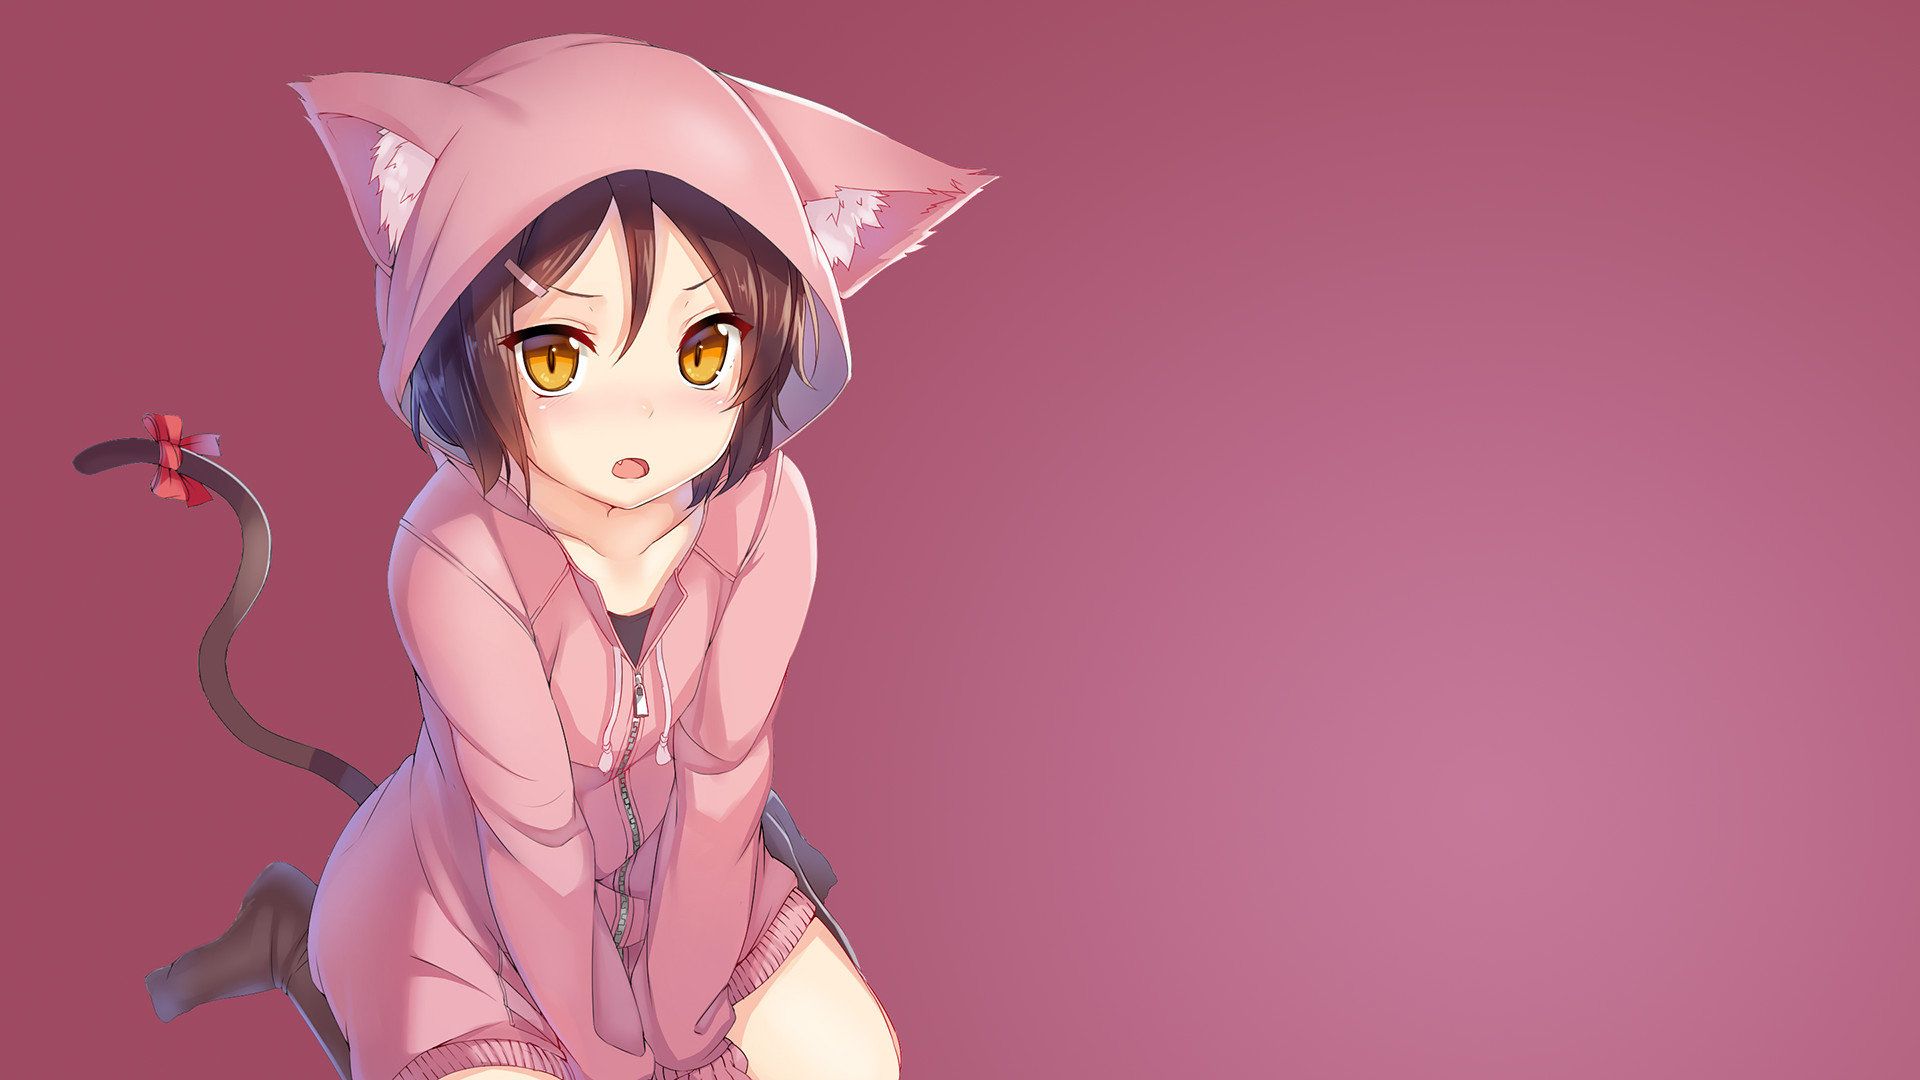 Cute Anime Girl Wallpaper Cute Anime Girl Background Download